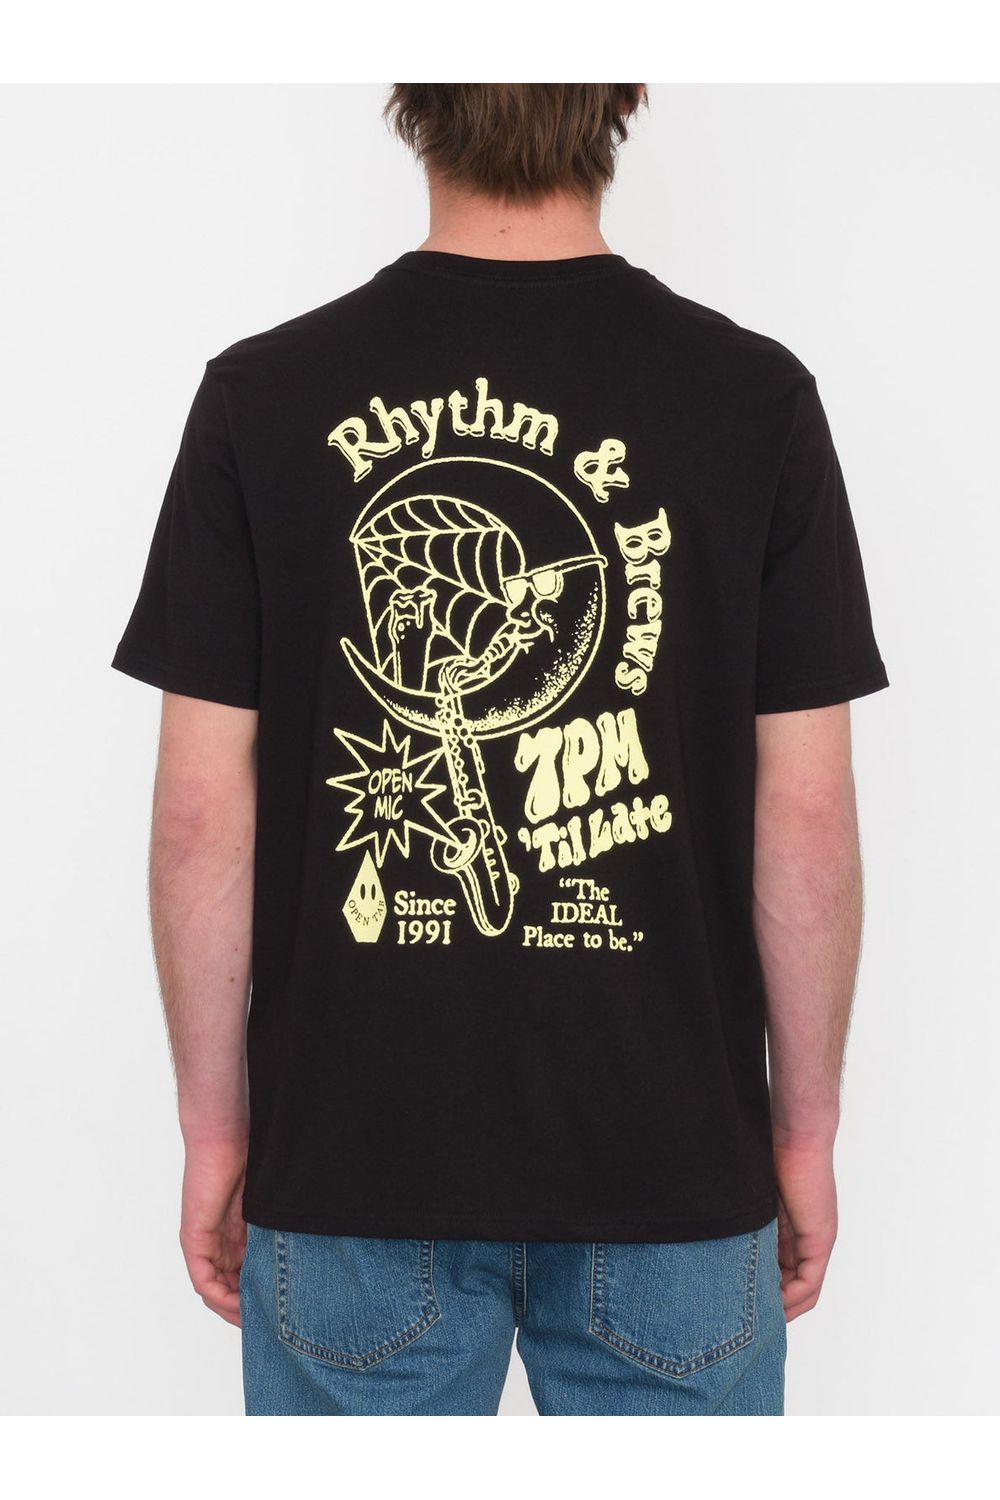 Volcom Rhythm 1991 Bsc Short Sleeve T-Shirt Black